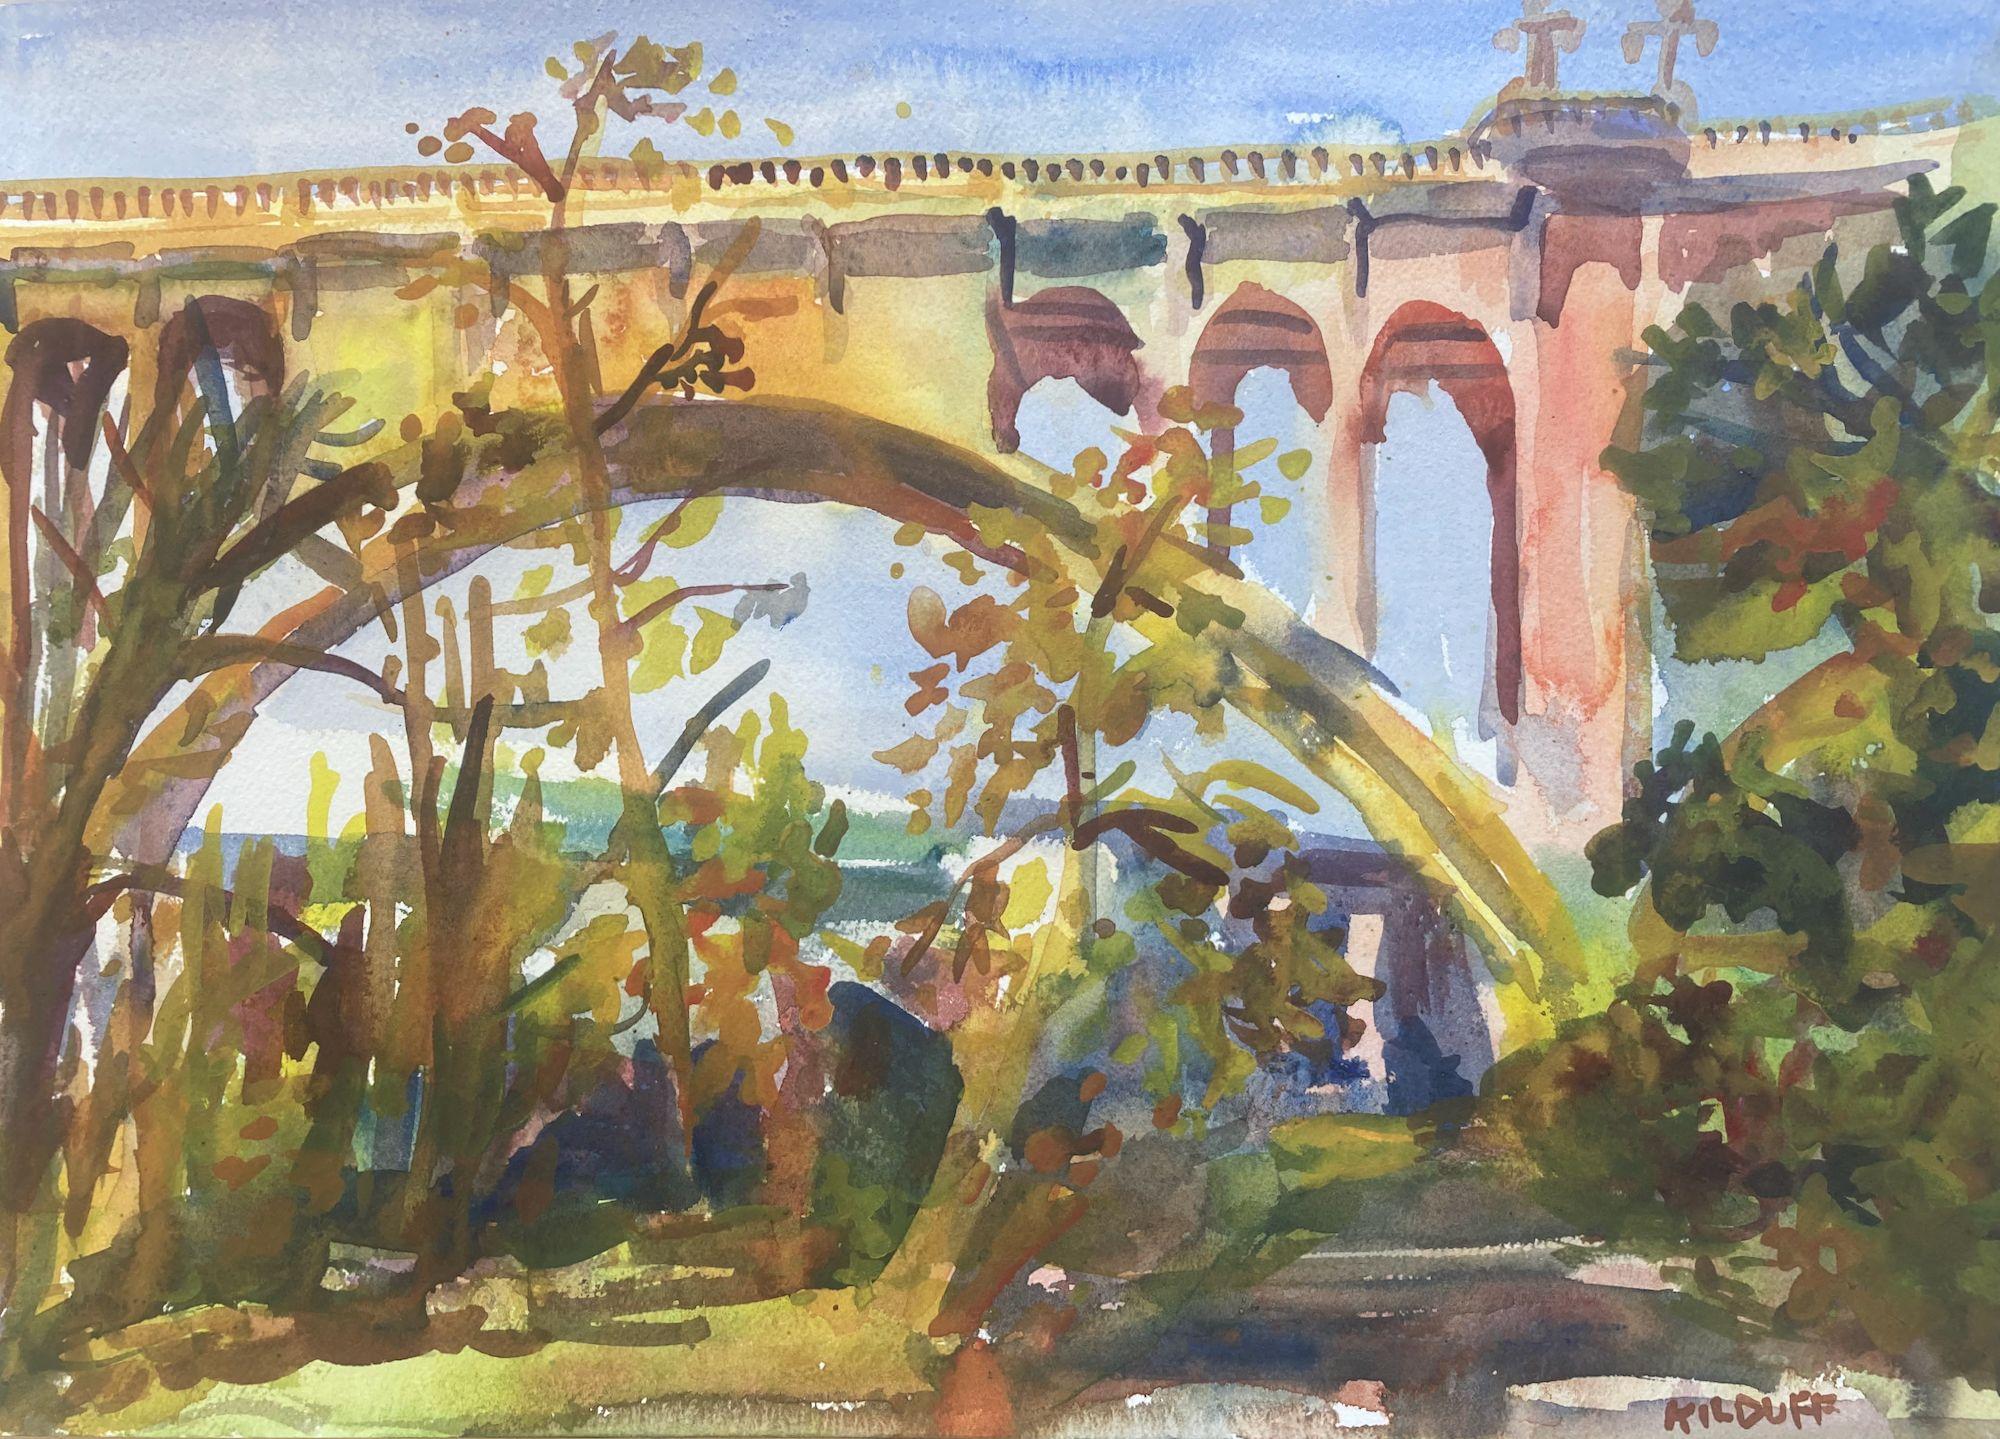 Bridge de Colorado Street, Pasadena, peinture, aquarelle sur papier aquarelle - Art de John Kilduff